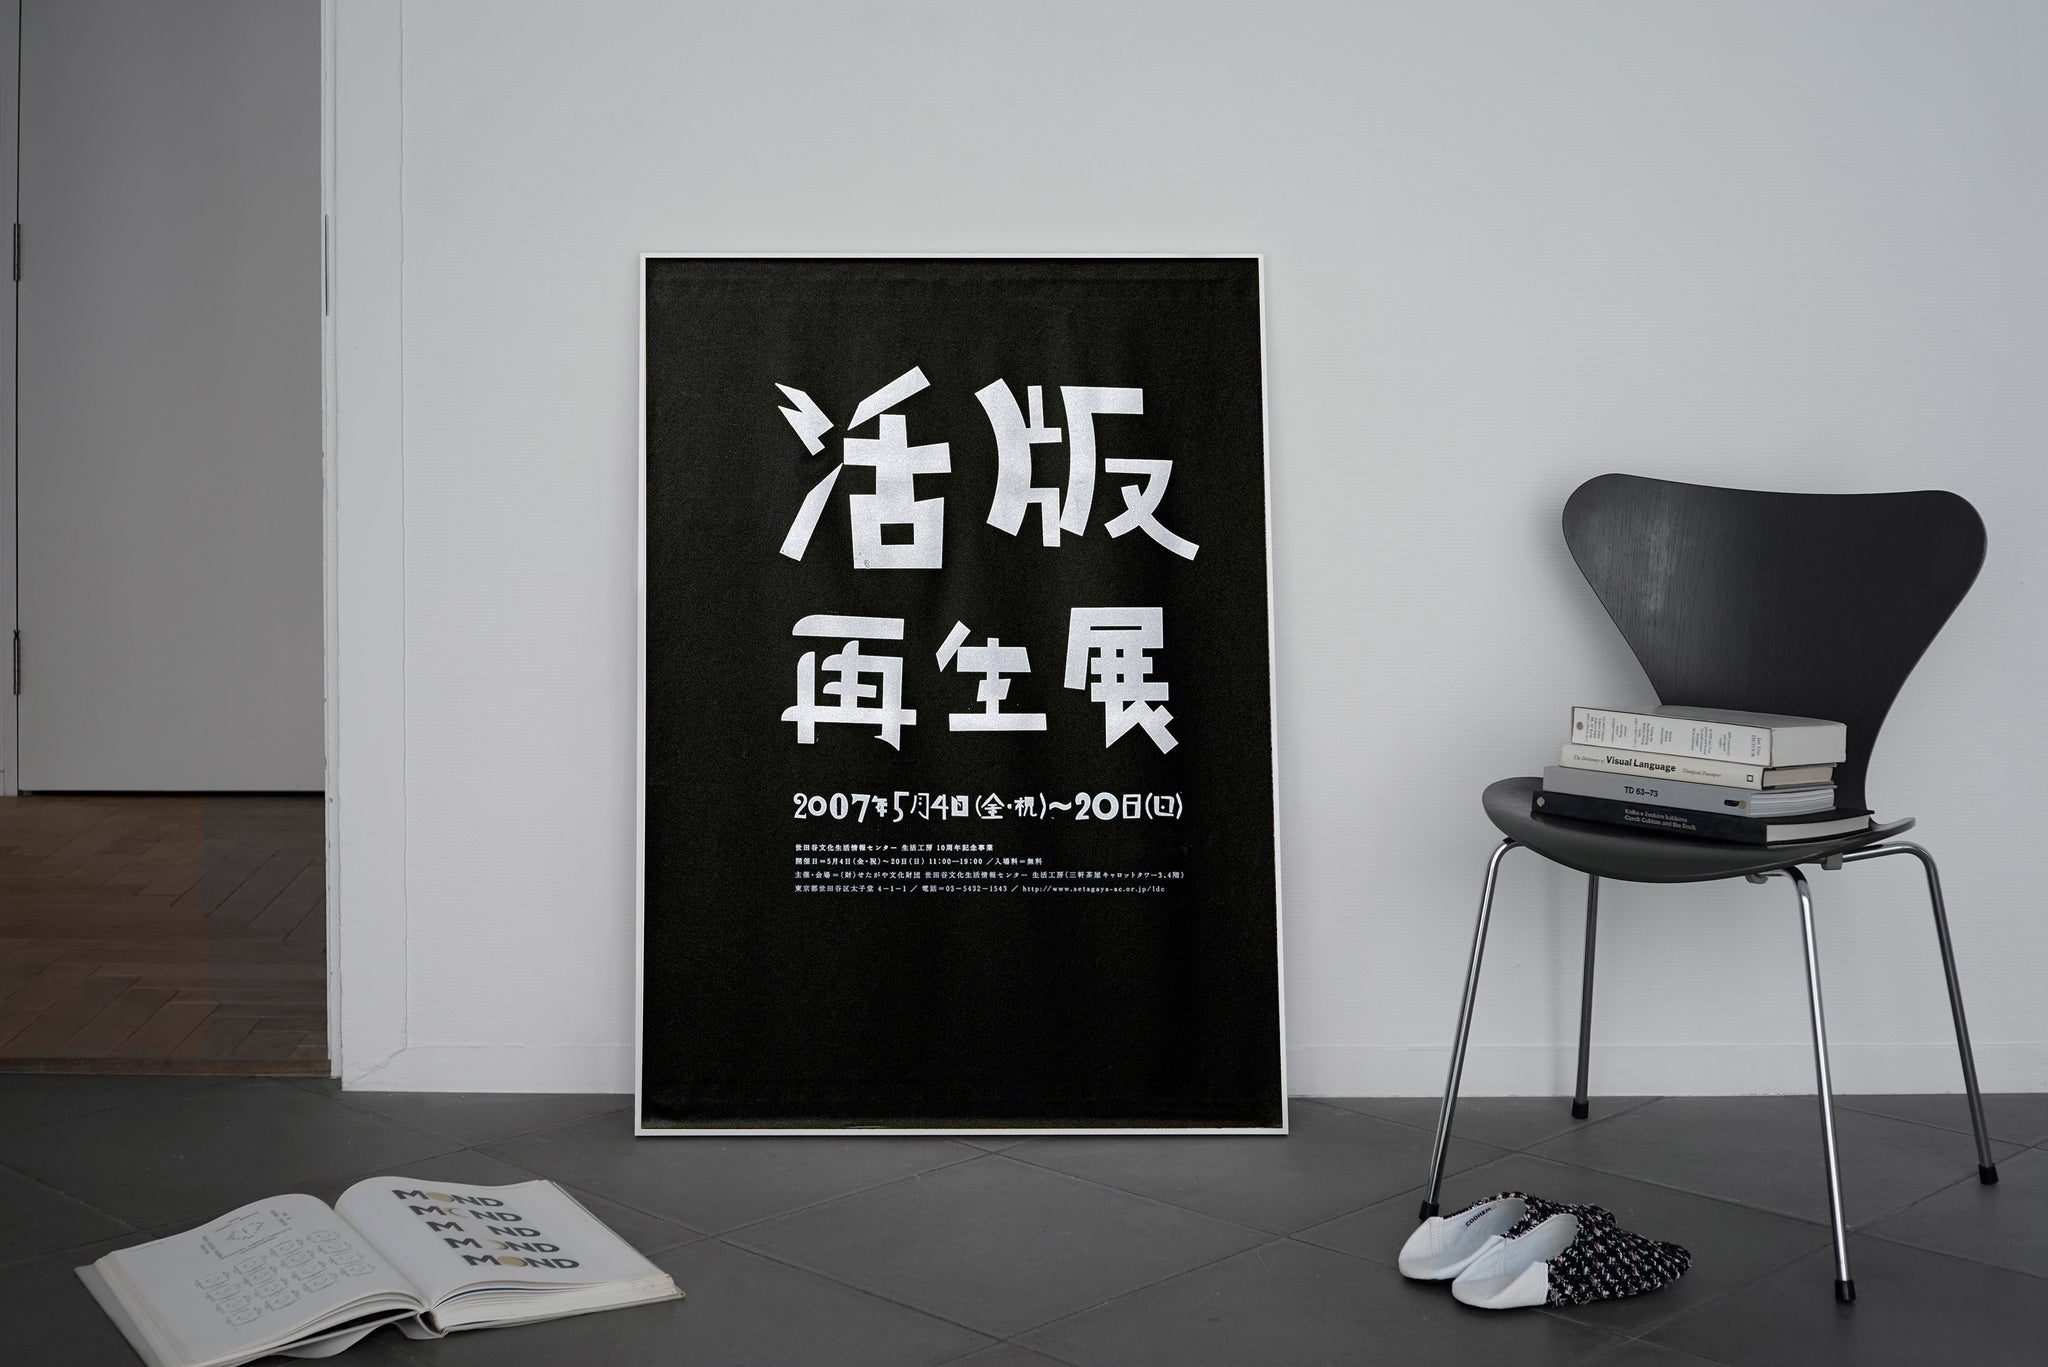 Exhibition for regenerate letterpress(Black paper / White printing)